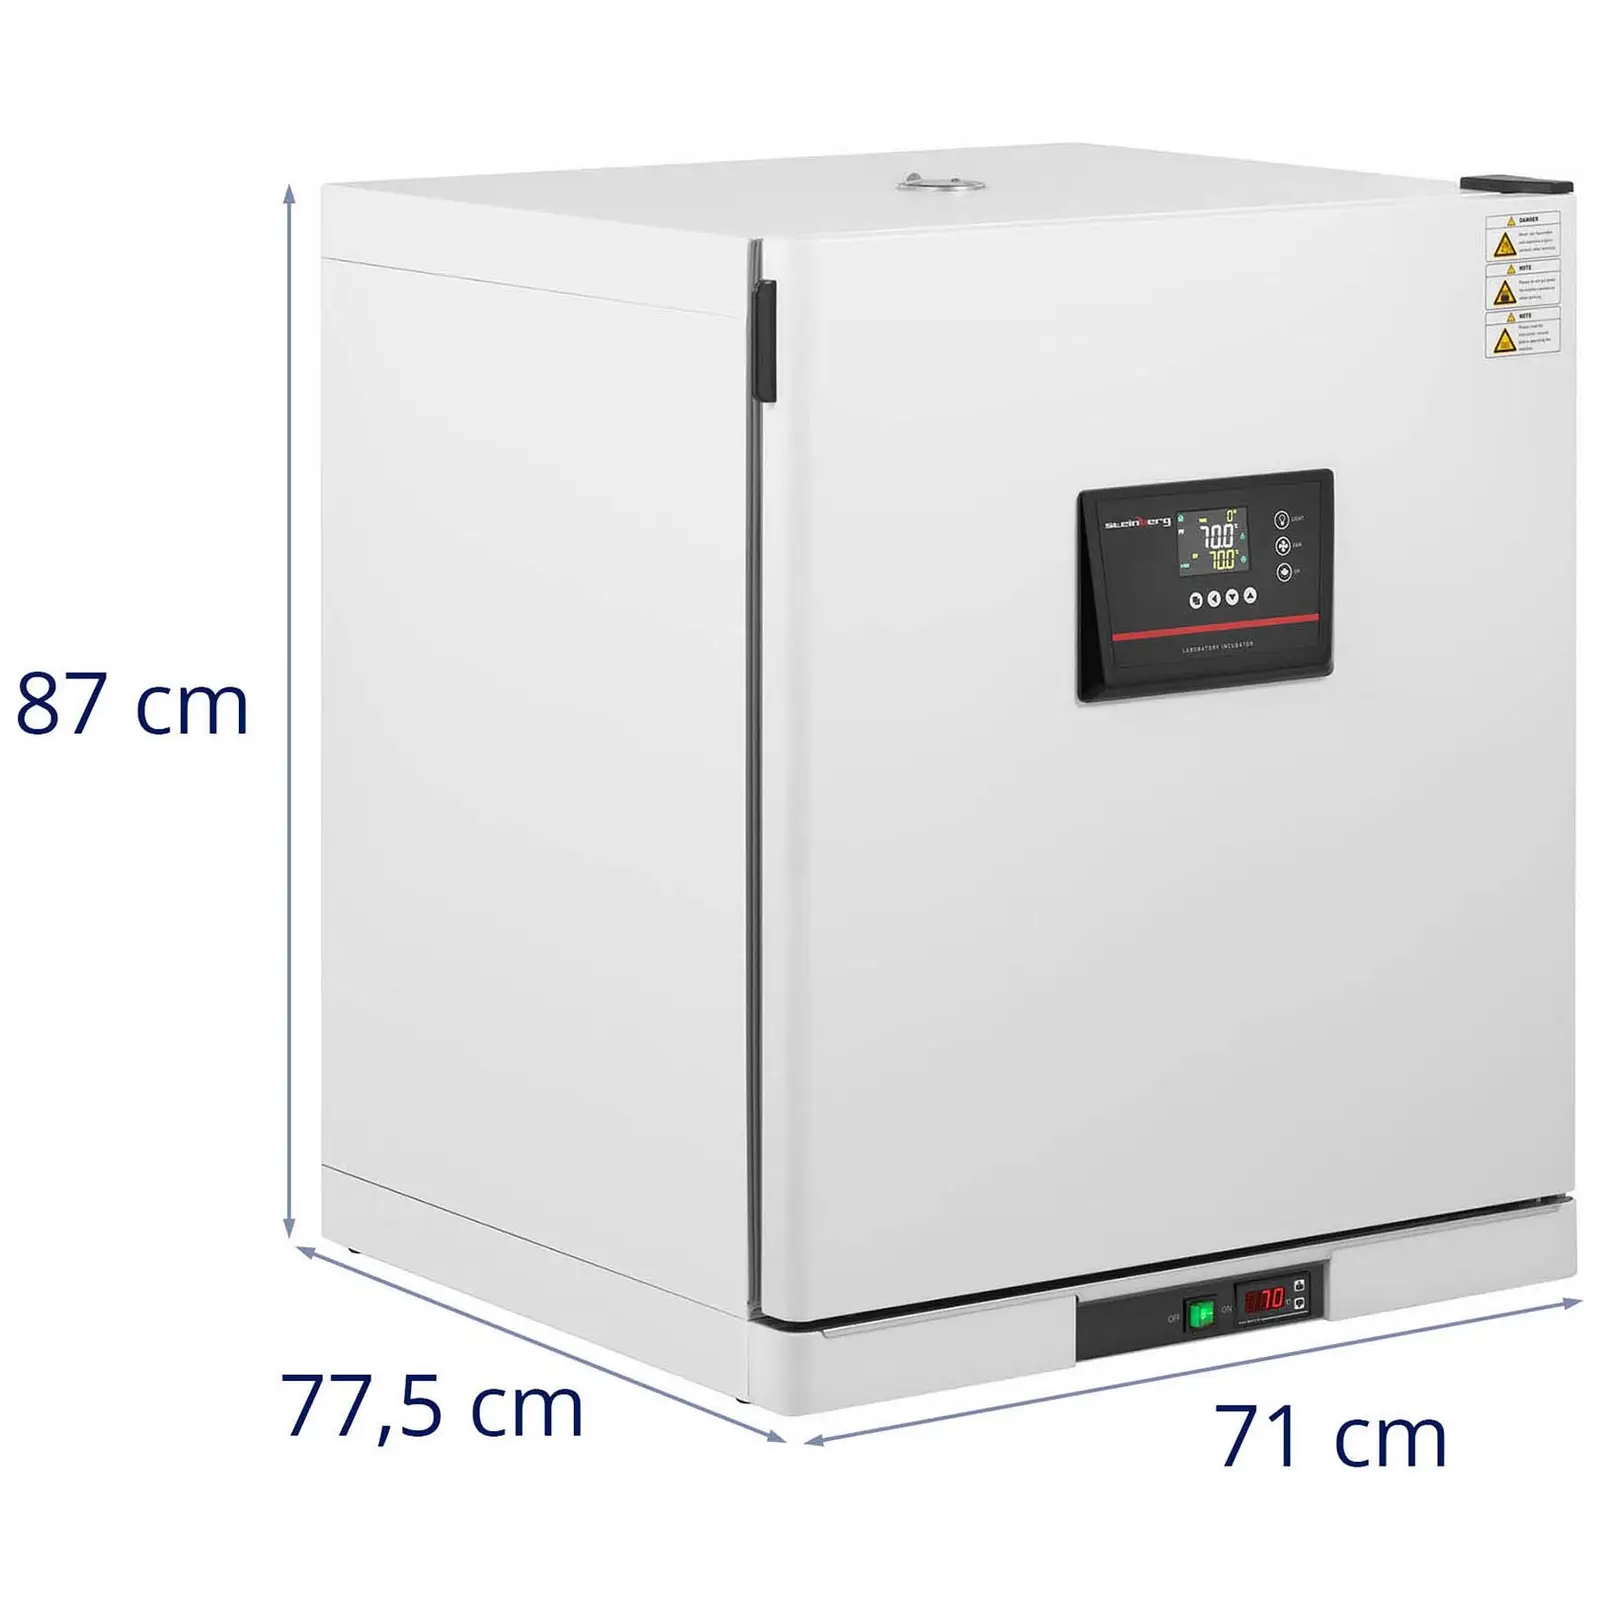 Laboratórny inkubátor - do 70 °C - 210 l - cirkulujúci vzduch